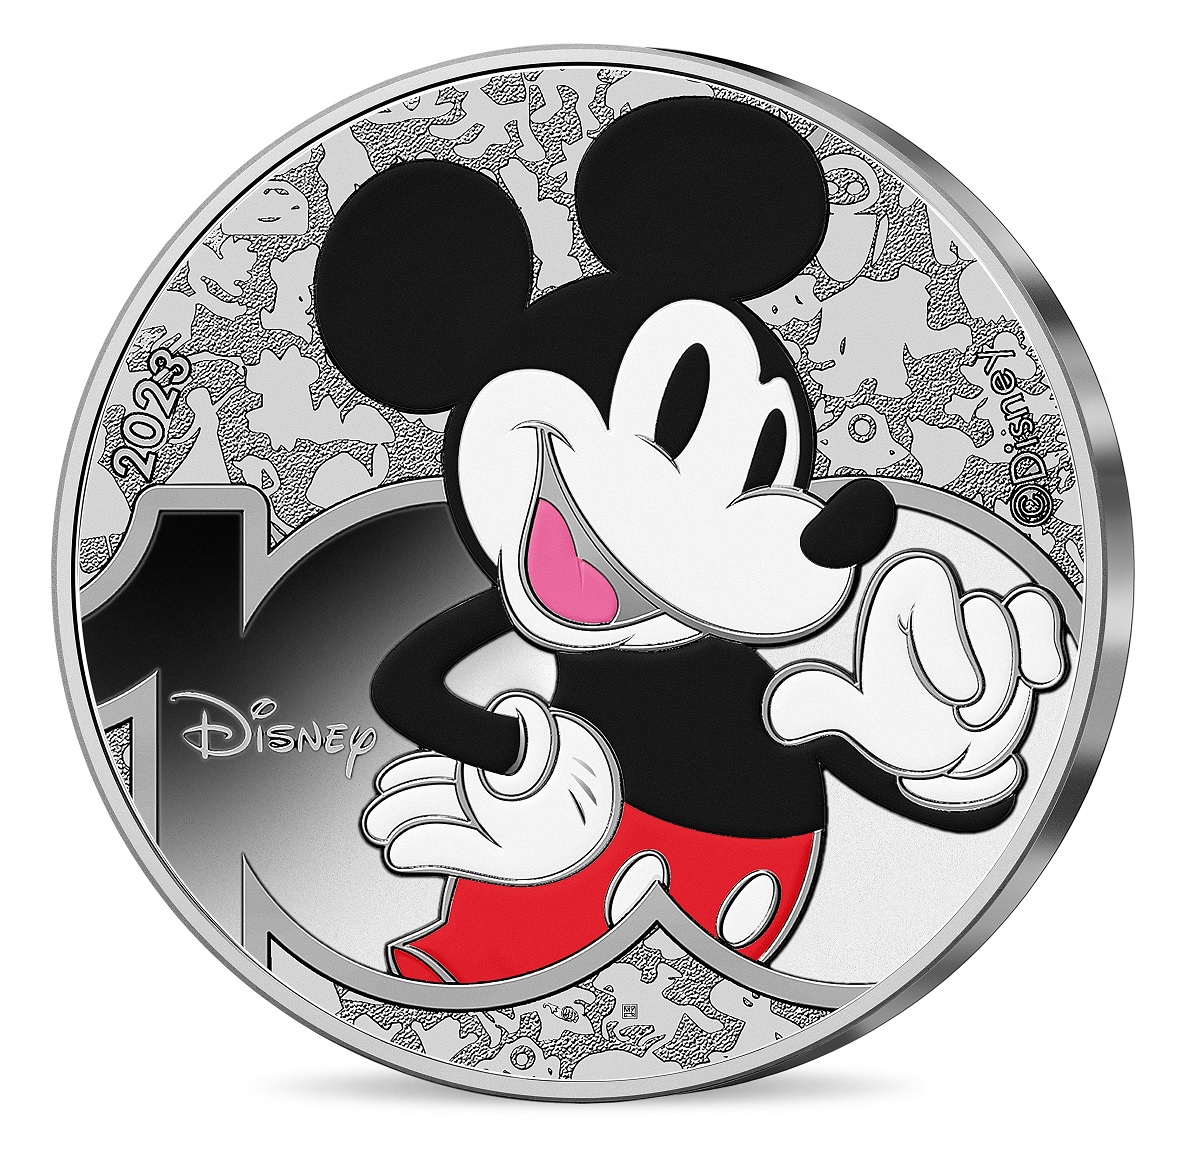 (EUR07.10.E.2023.10041378260005) 10 euro France 2023 silver - Disney Studios 100 Years Obverse (zoom)